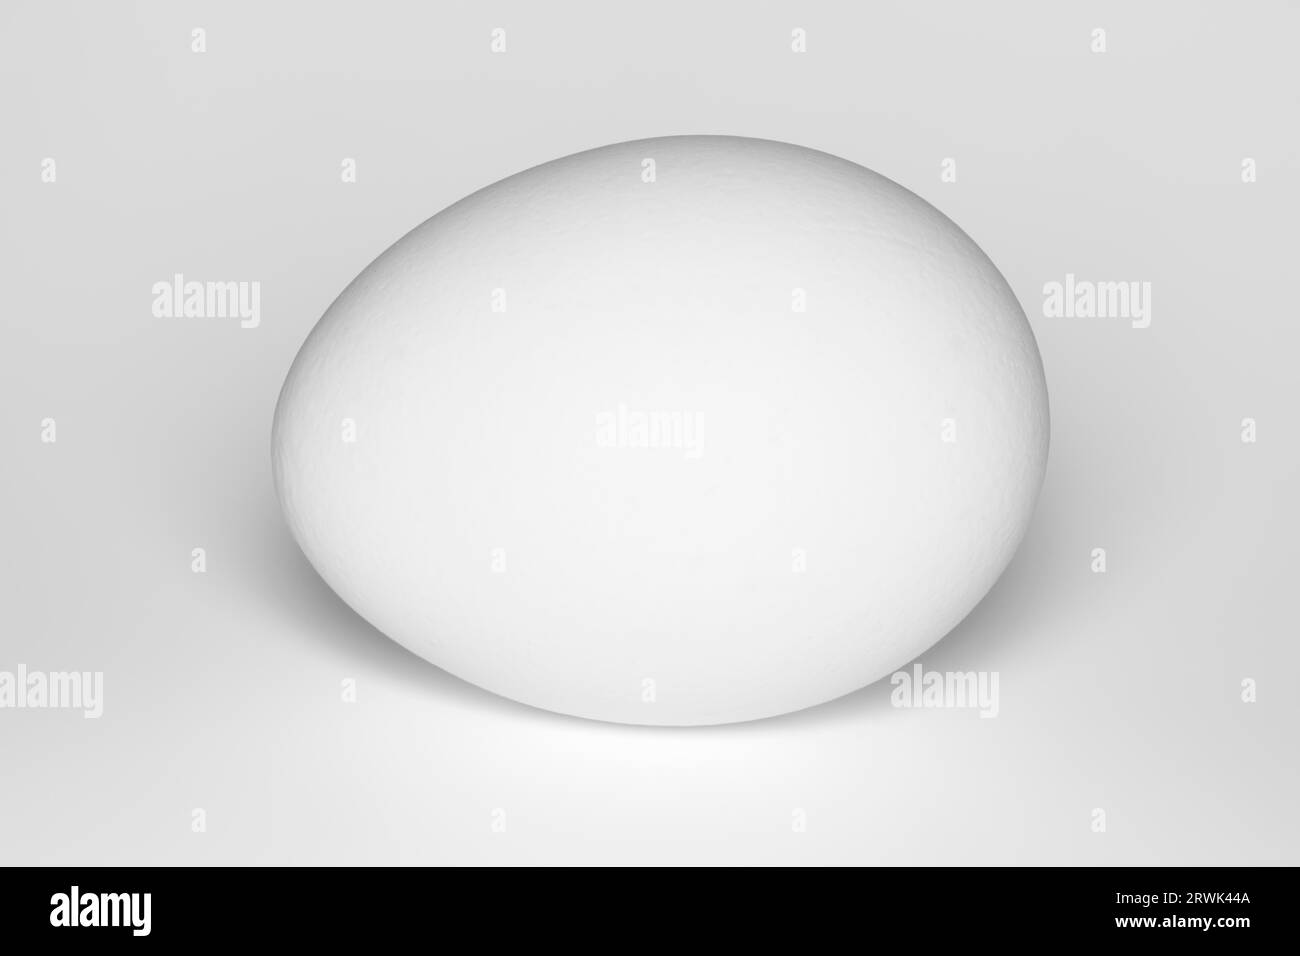 White chicken egg on a white background Stock Photo